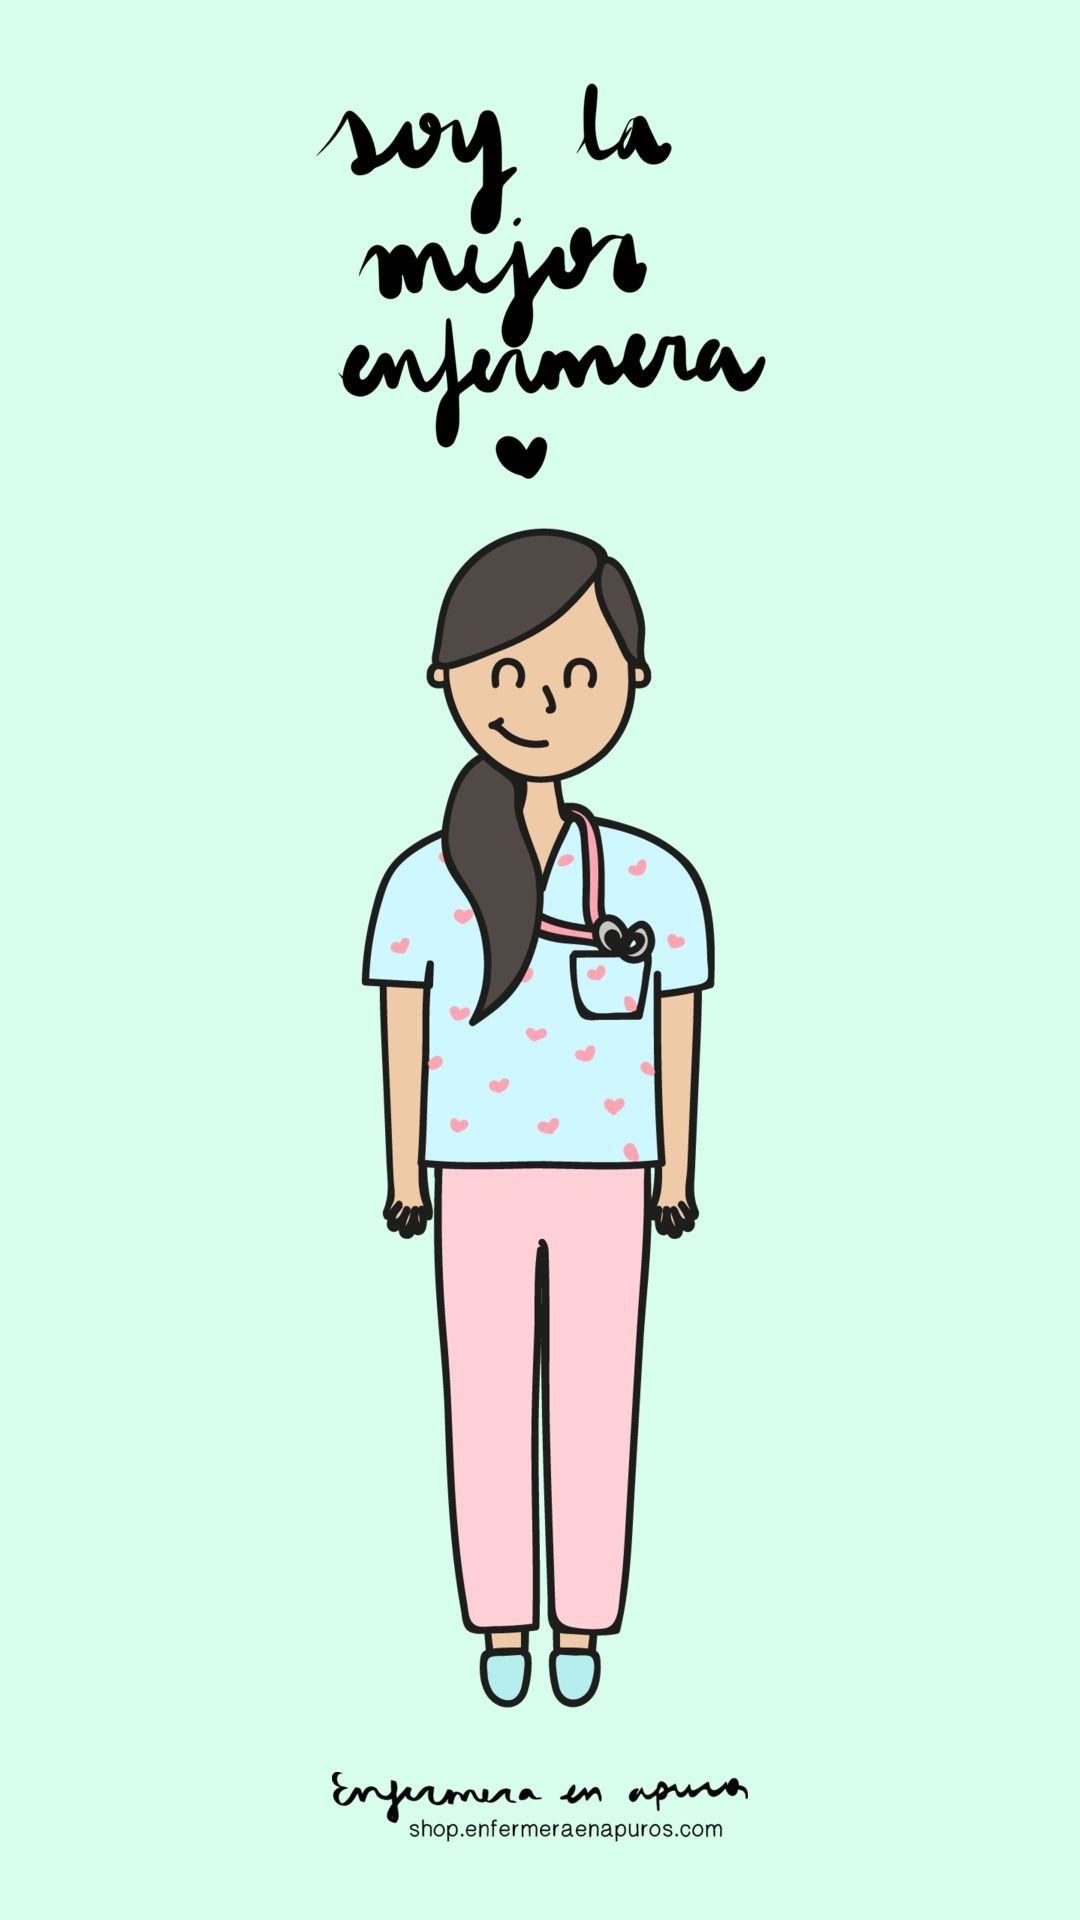 My own personal nurse avatar